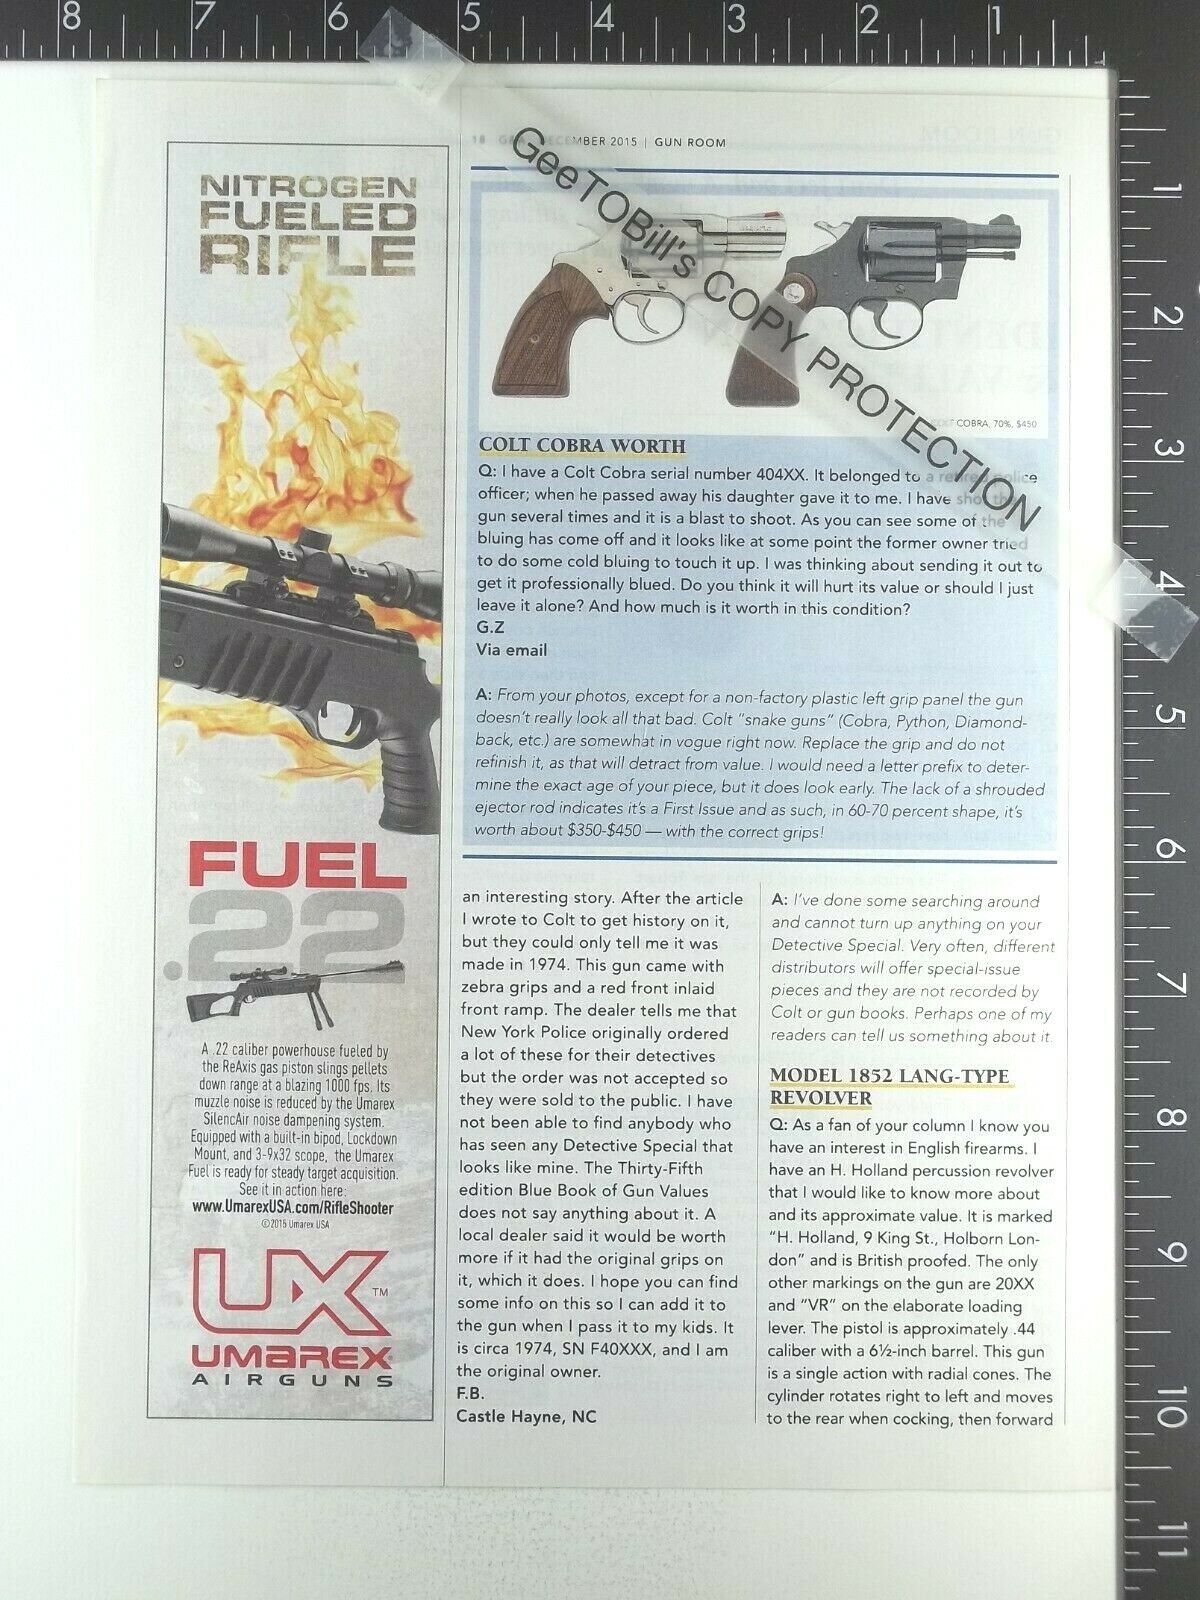 2015 AD ADVERTISING for UX Umarex Nitrogen Fuel .22  Airgun Air Pellet Gun rifle